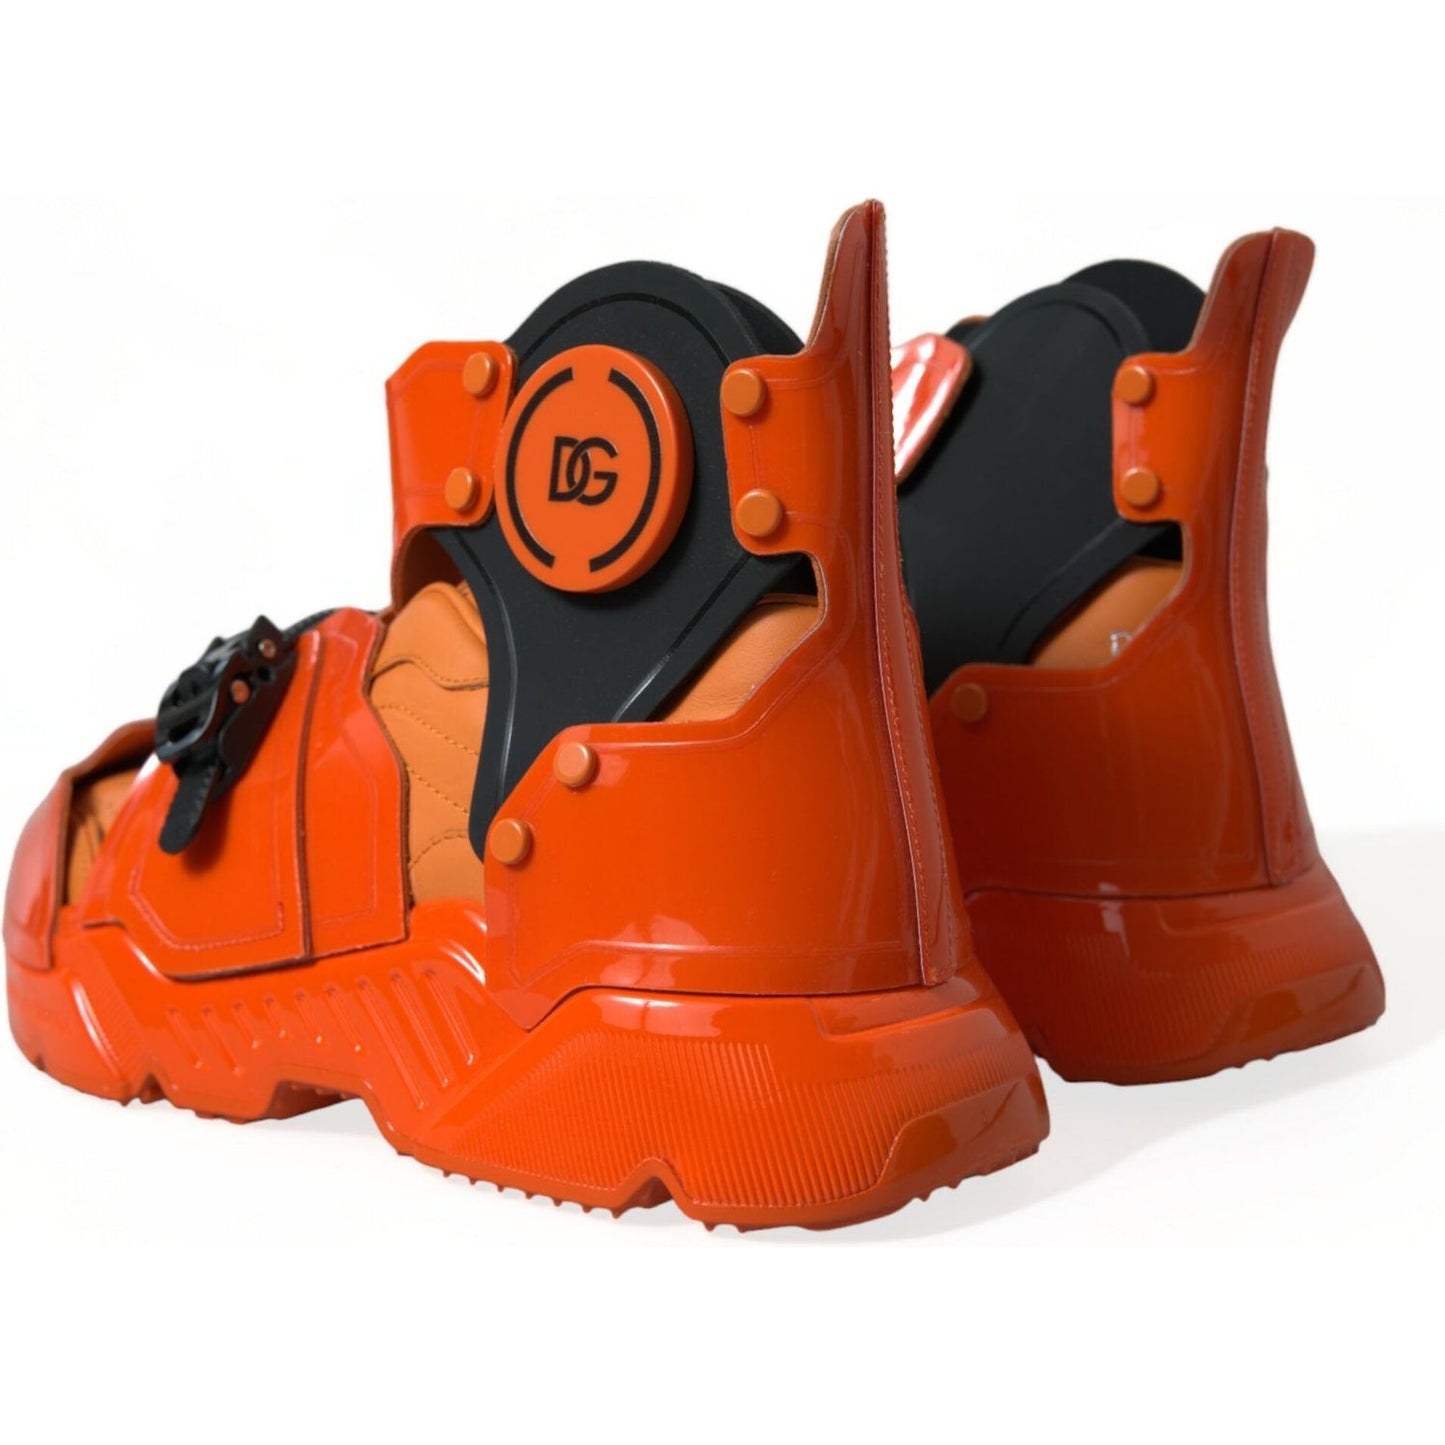 Dolce & Gabbana Orange Breezy High-Top Sneakers Charm orange-multi-panel-chunky-high-top-sneakers-shoes